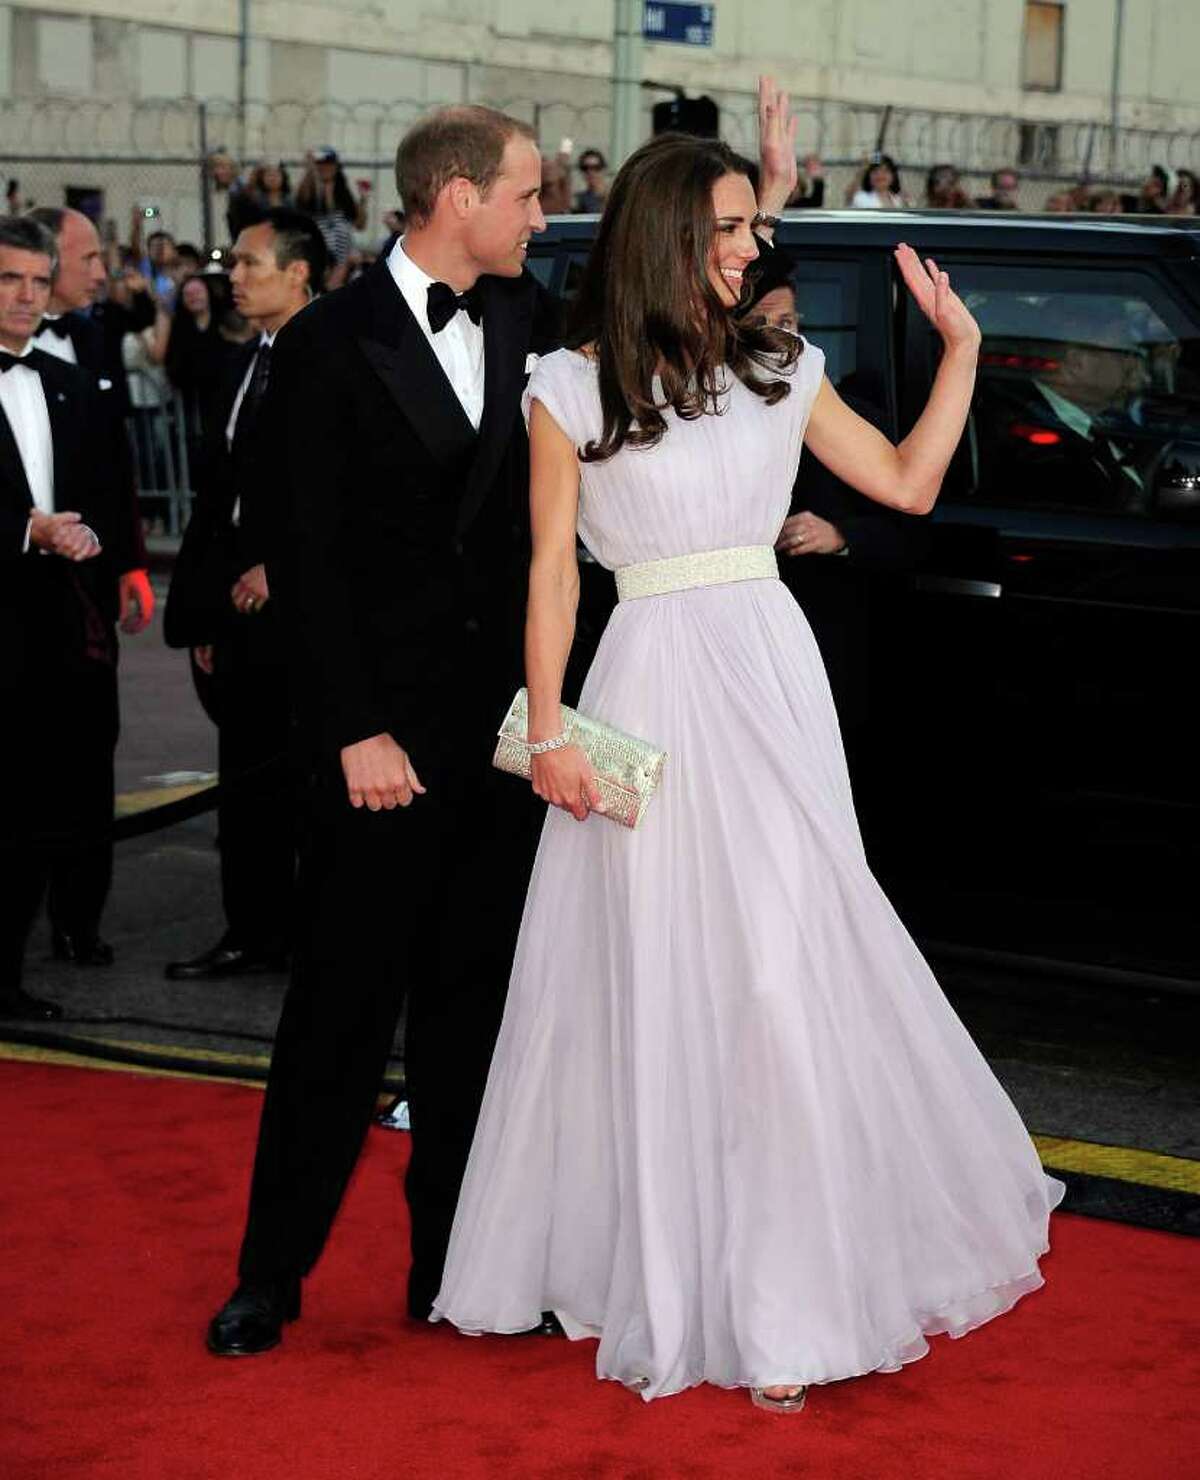 Prince William, Duke of Cambridge (L) and Catherine, Duchess of Cambridge arrive.